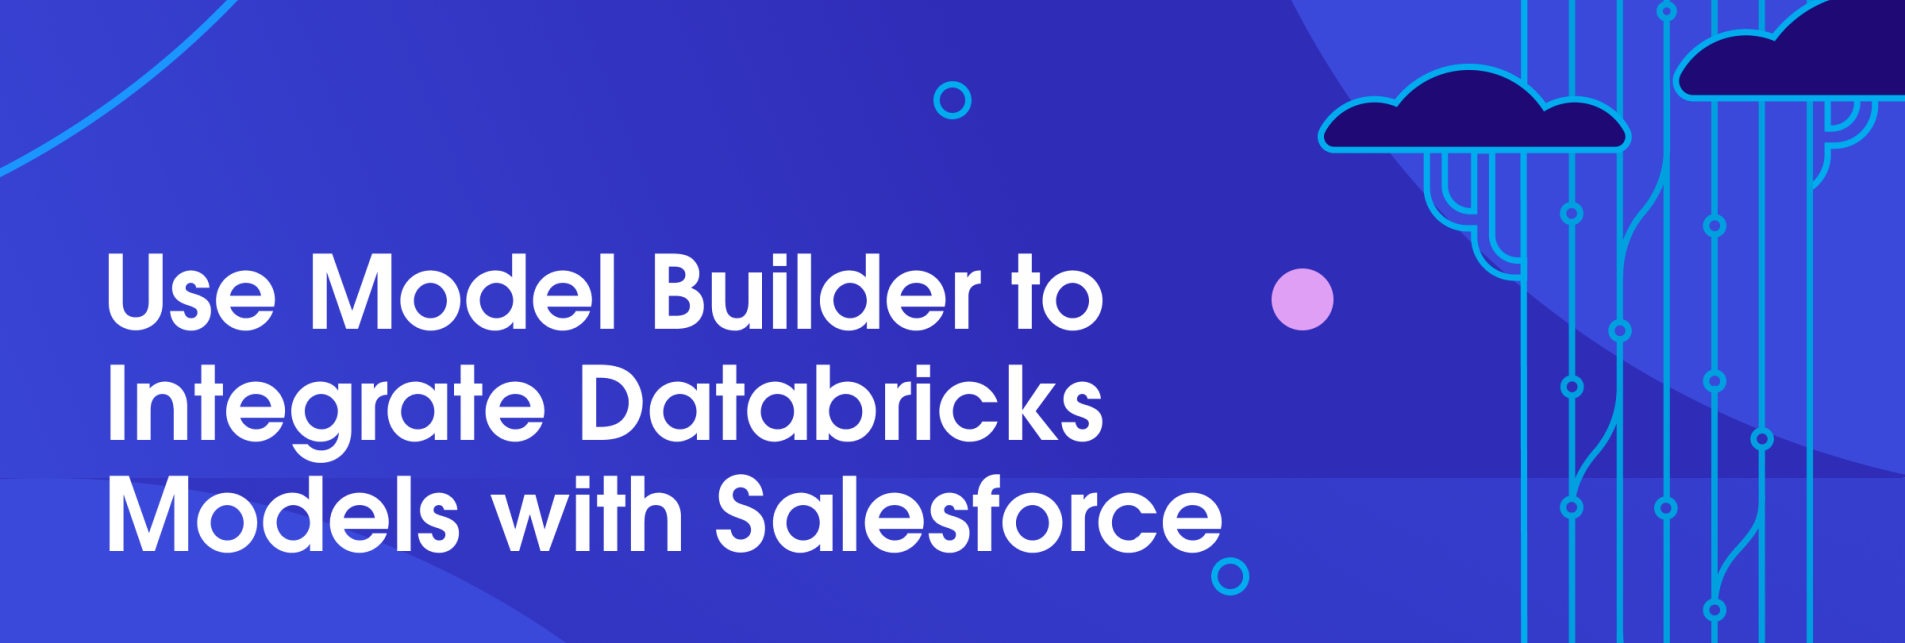 Use Model Builder to Integrate Databricks Models with Salesforce